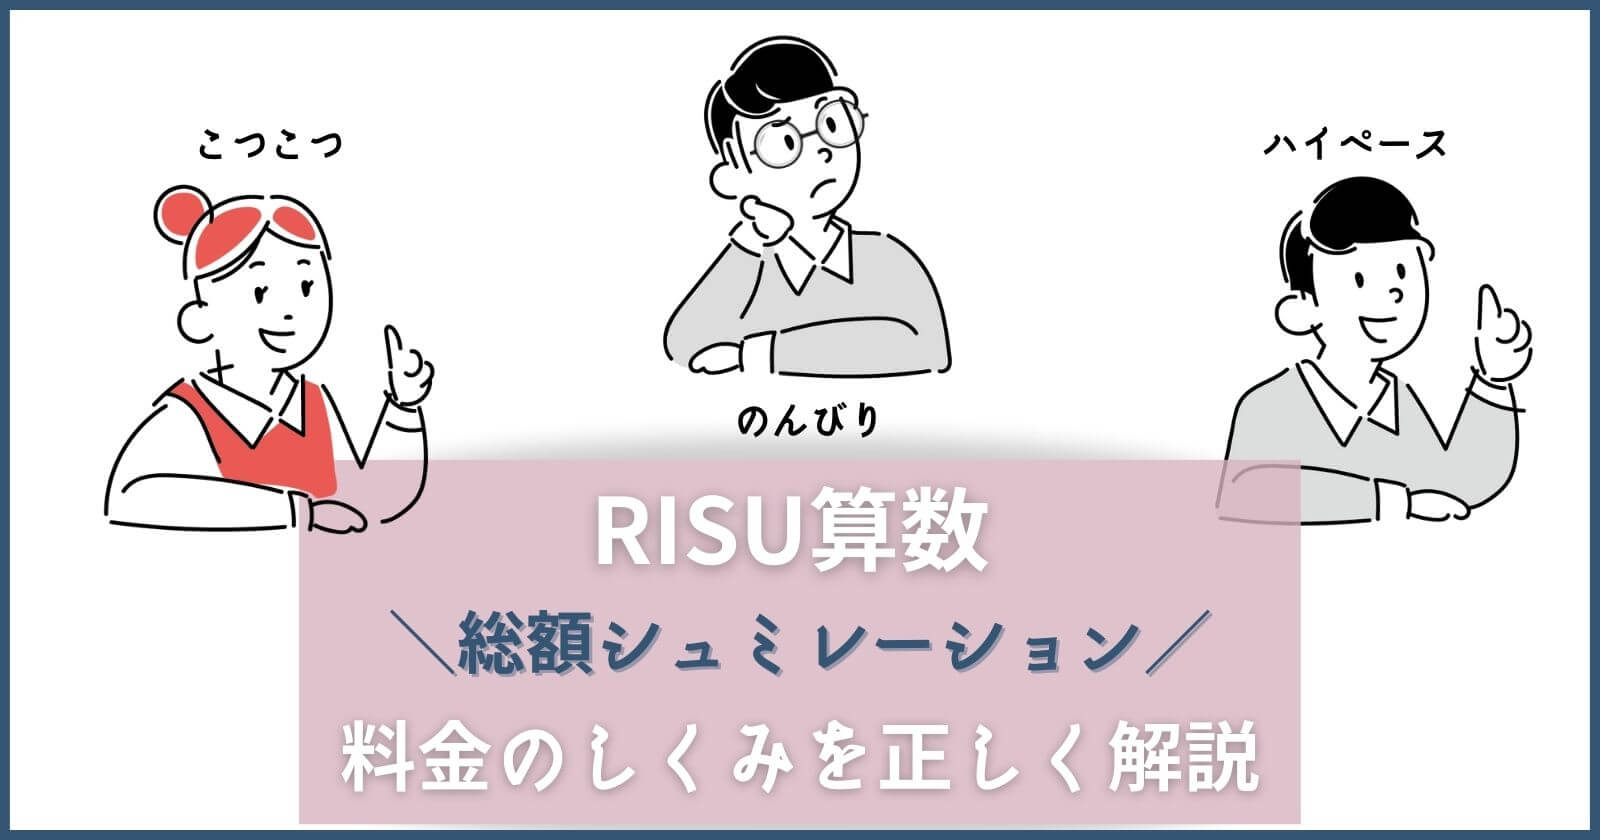 RISU算数【総額シュミレーション】費用を正しくシンプル解説リス攻略中